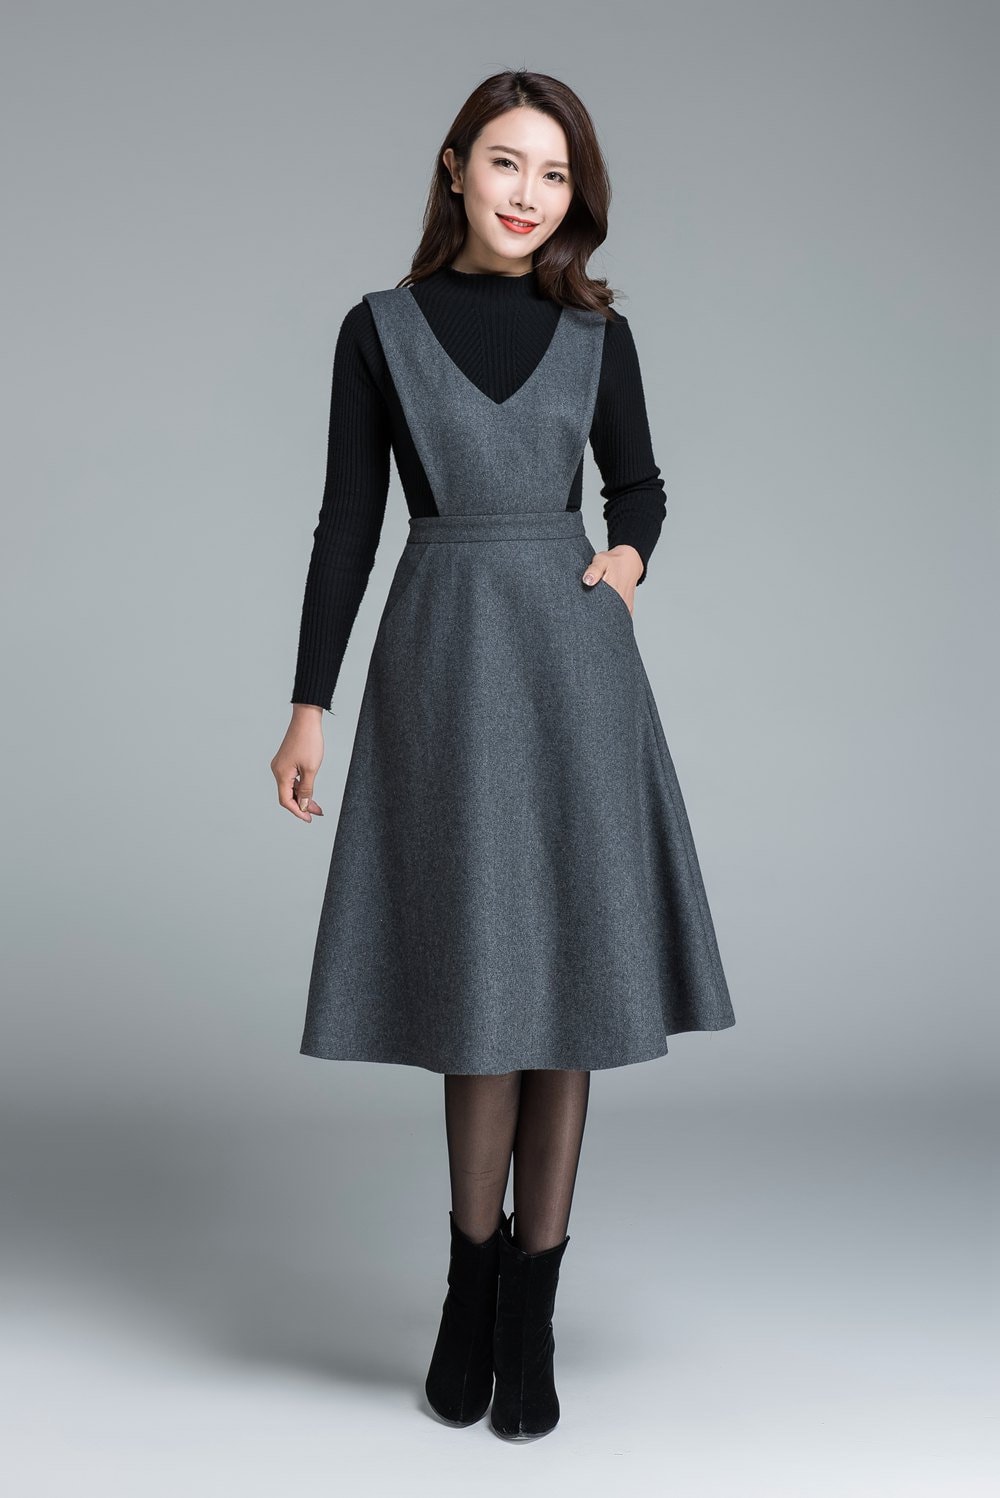 Midi wool dress knee length dress dark grey dress dress | Etsy